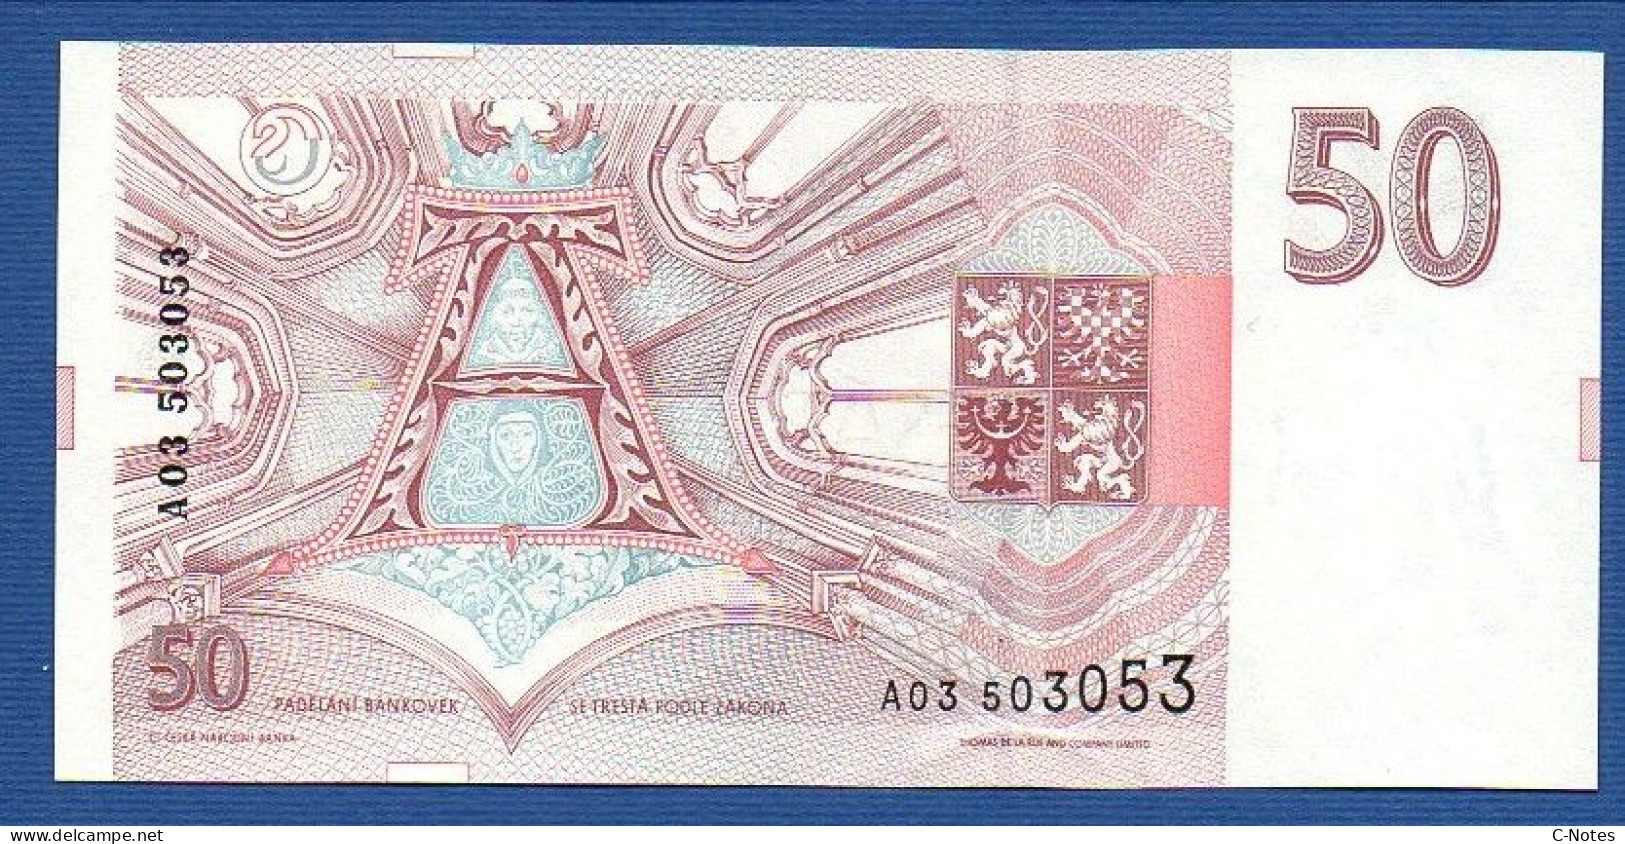 CZECHIA - CZECH Republic - P. 4 – 50 Korun 1993  UNC, S/n A03 503053 - Czech Republic